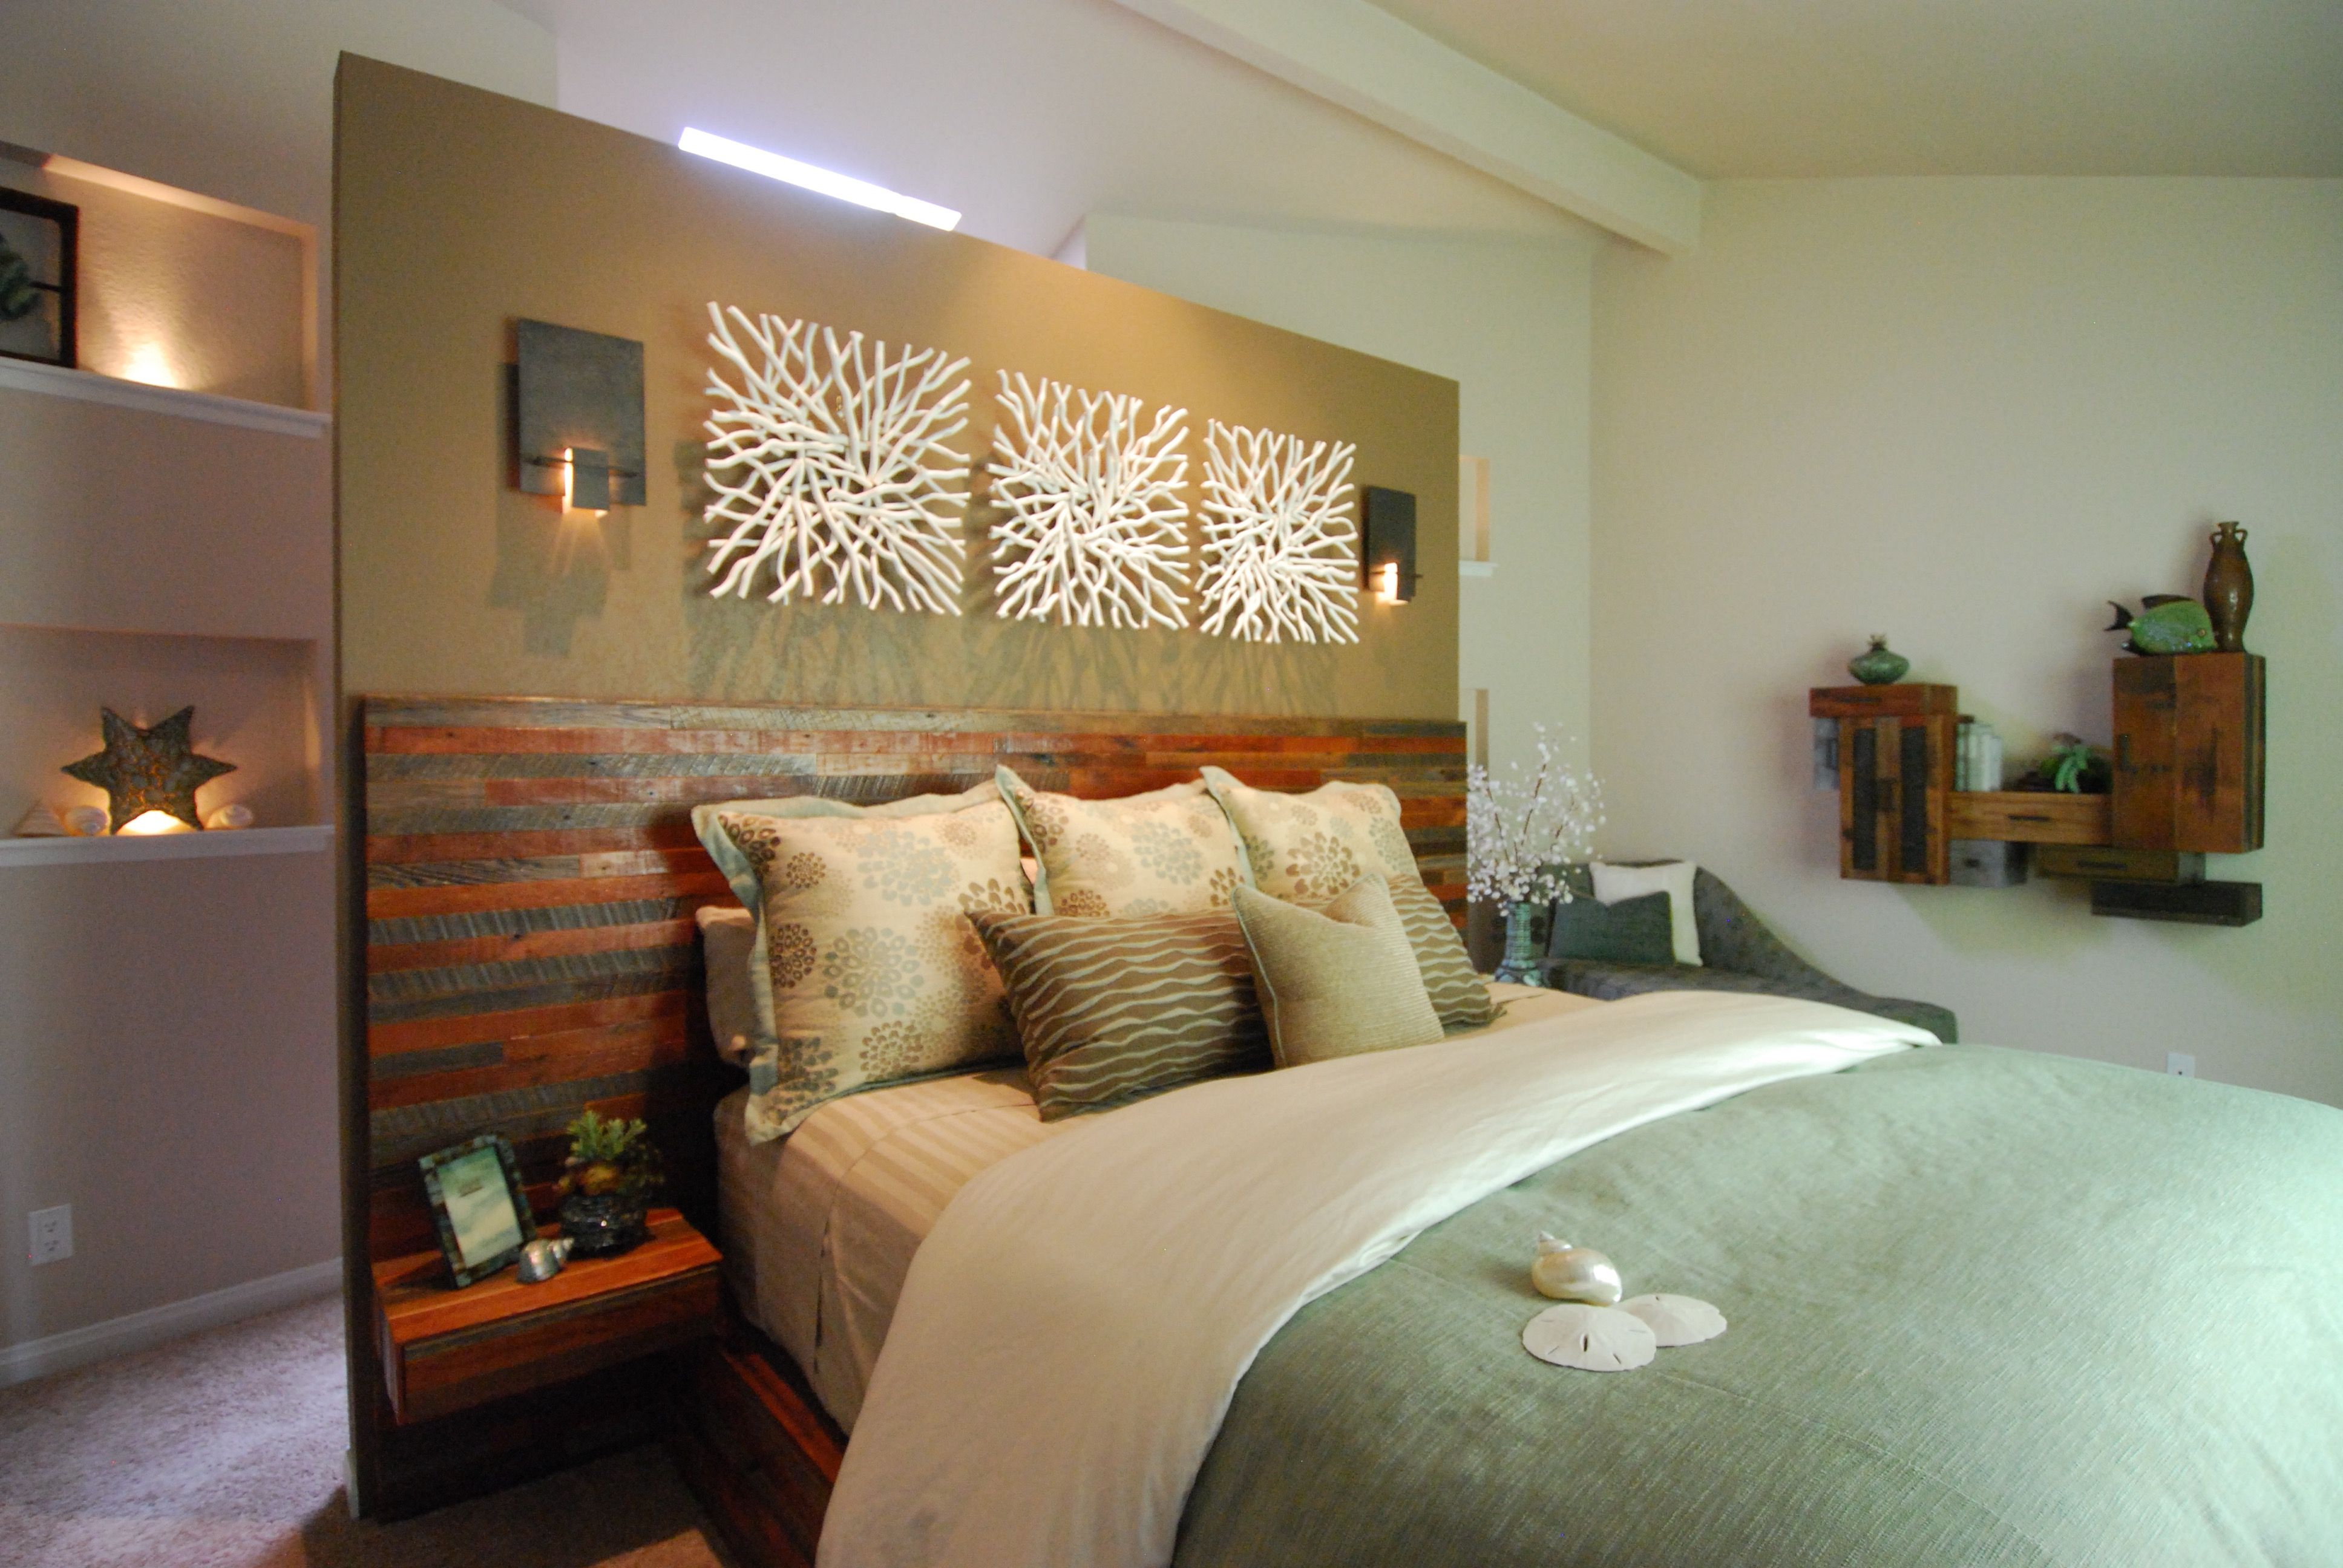 Modern Coastal Bedroom With Reclaimed Wood Headboard (View 20 of 23)